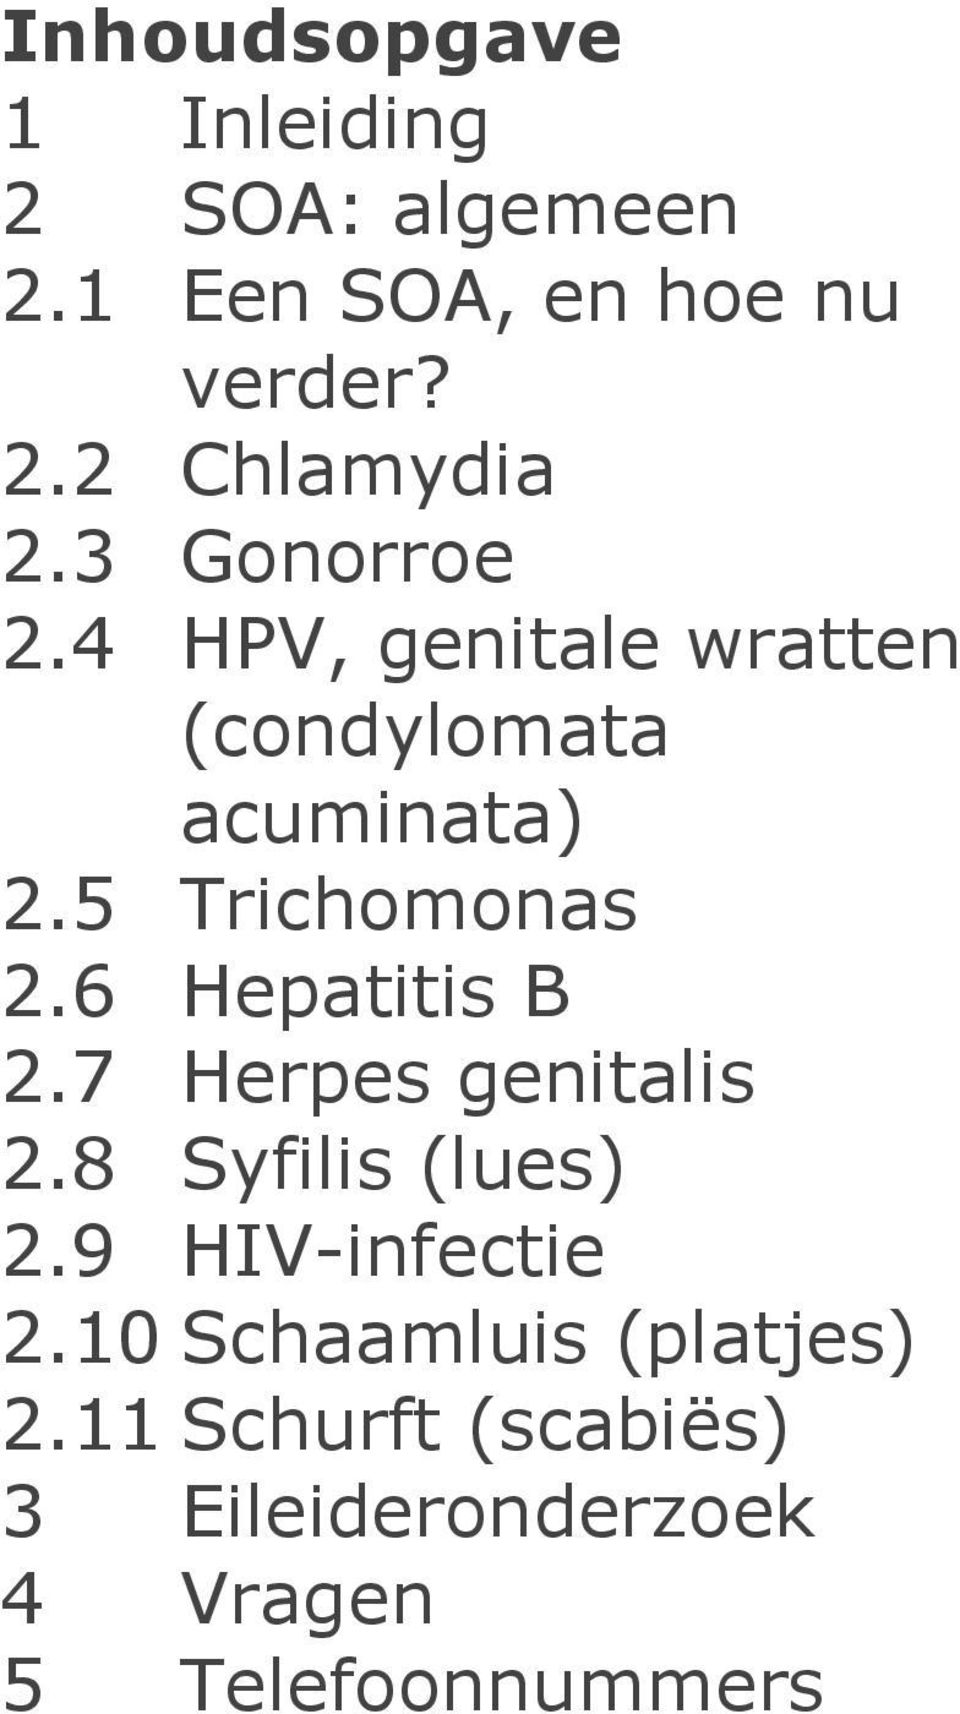 6 Hepatitis B 2.7 Herpes genitalis 2.8 Syfilis (lues) 2.9 HIV-infectie 2.